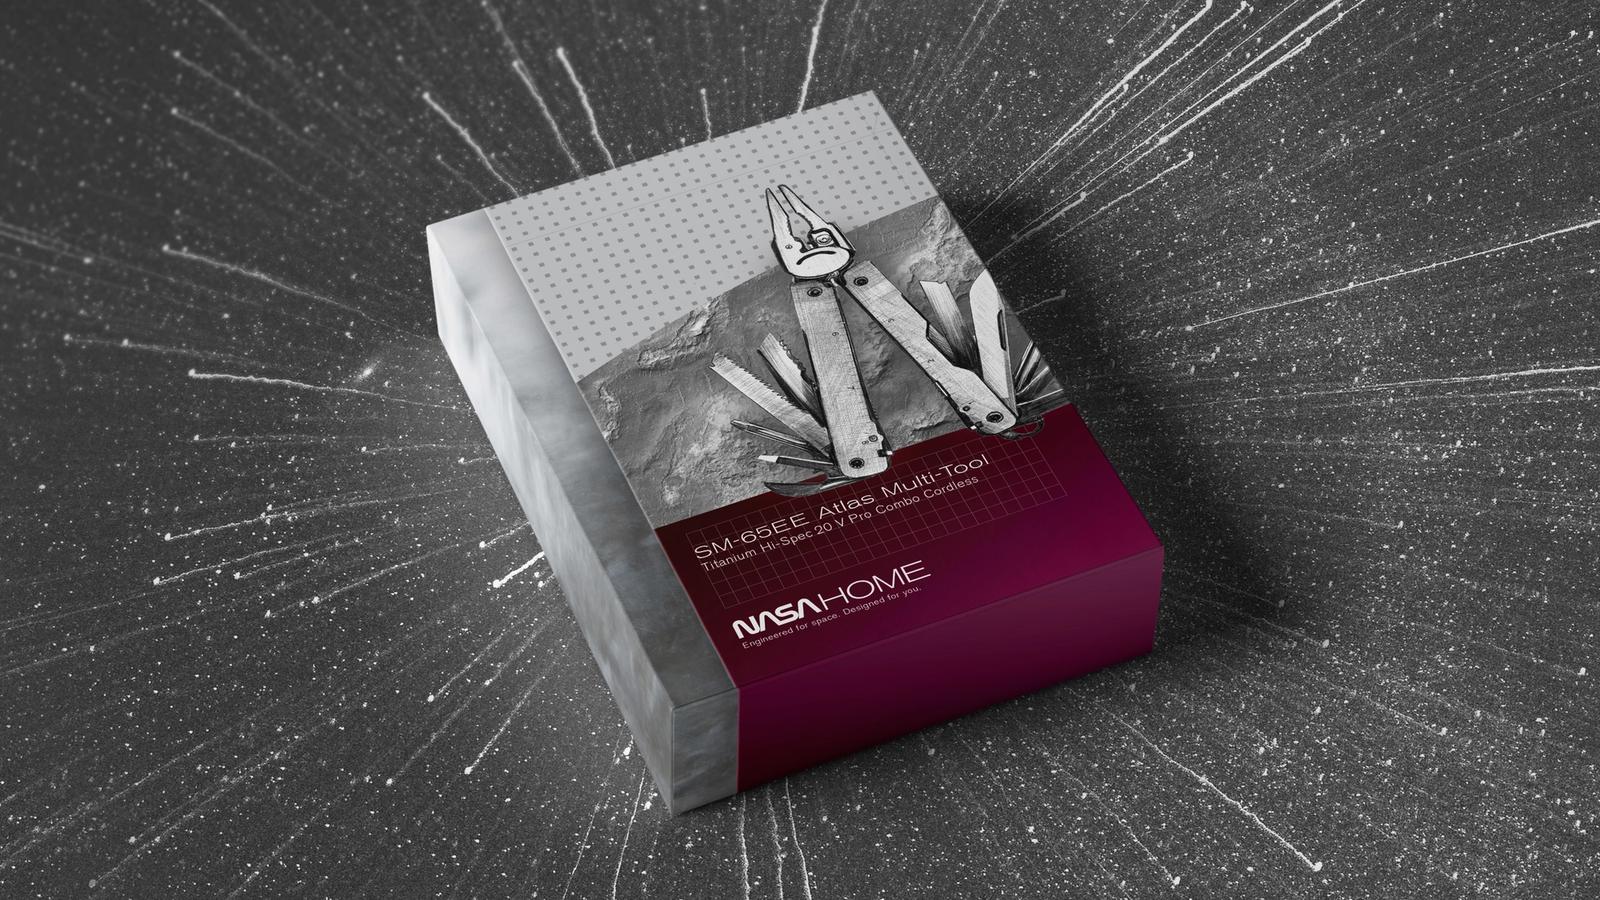 NASA Home product packaging